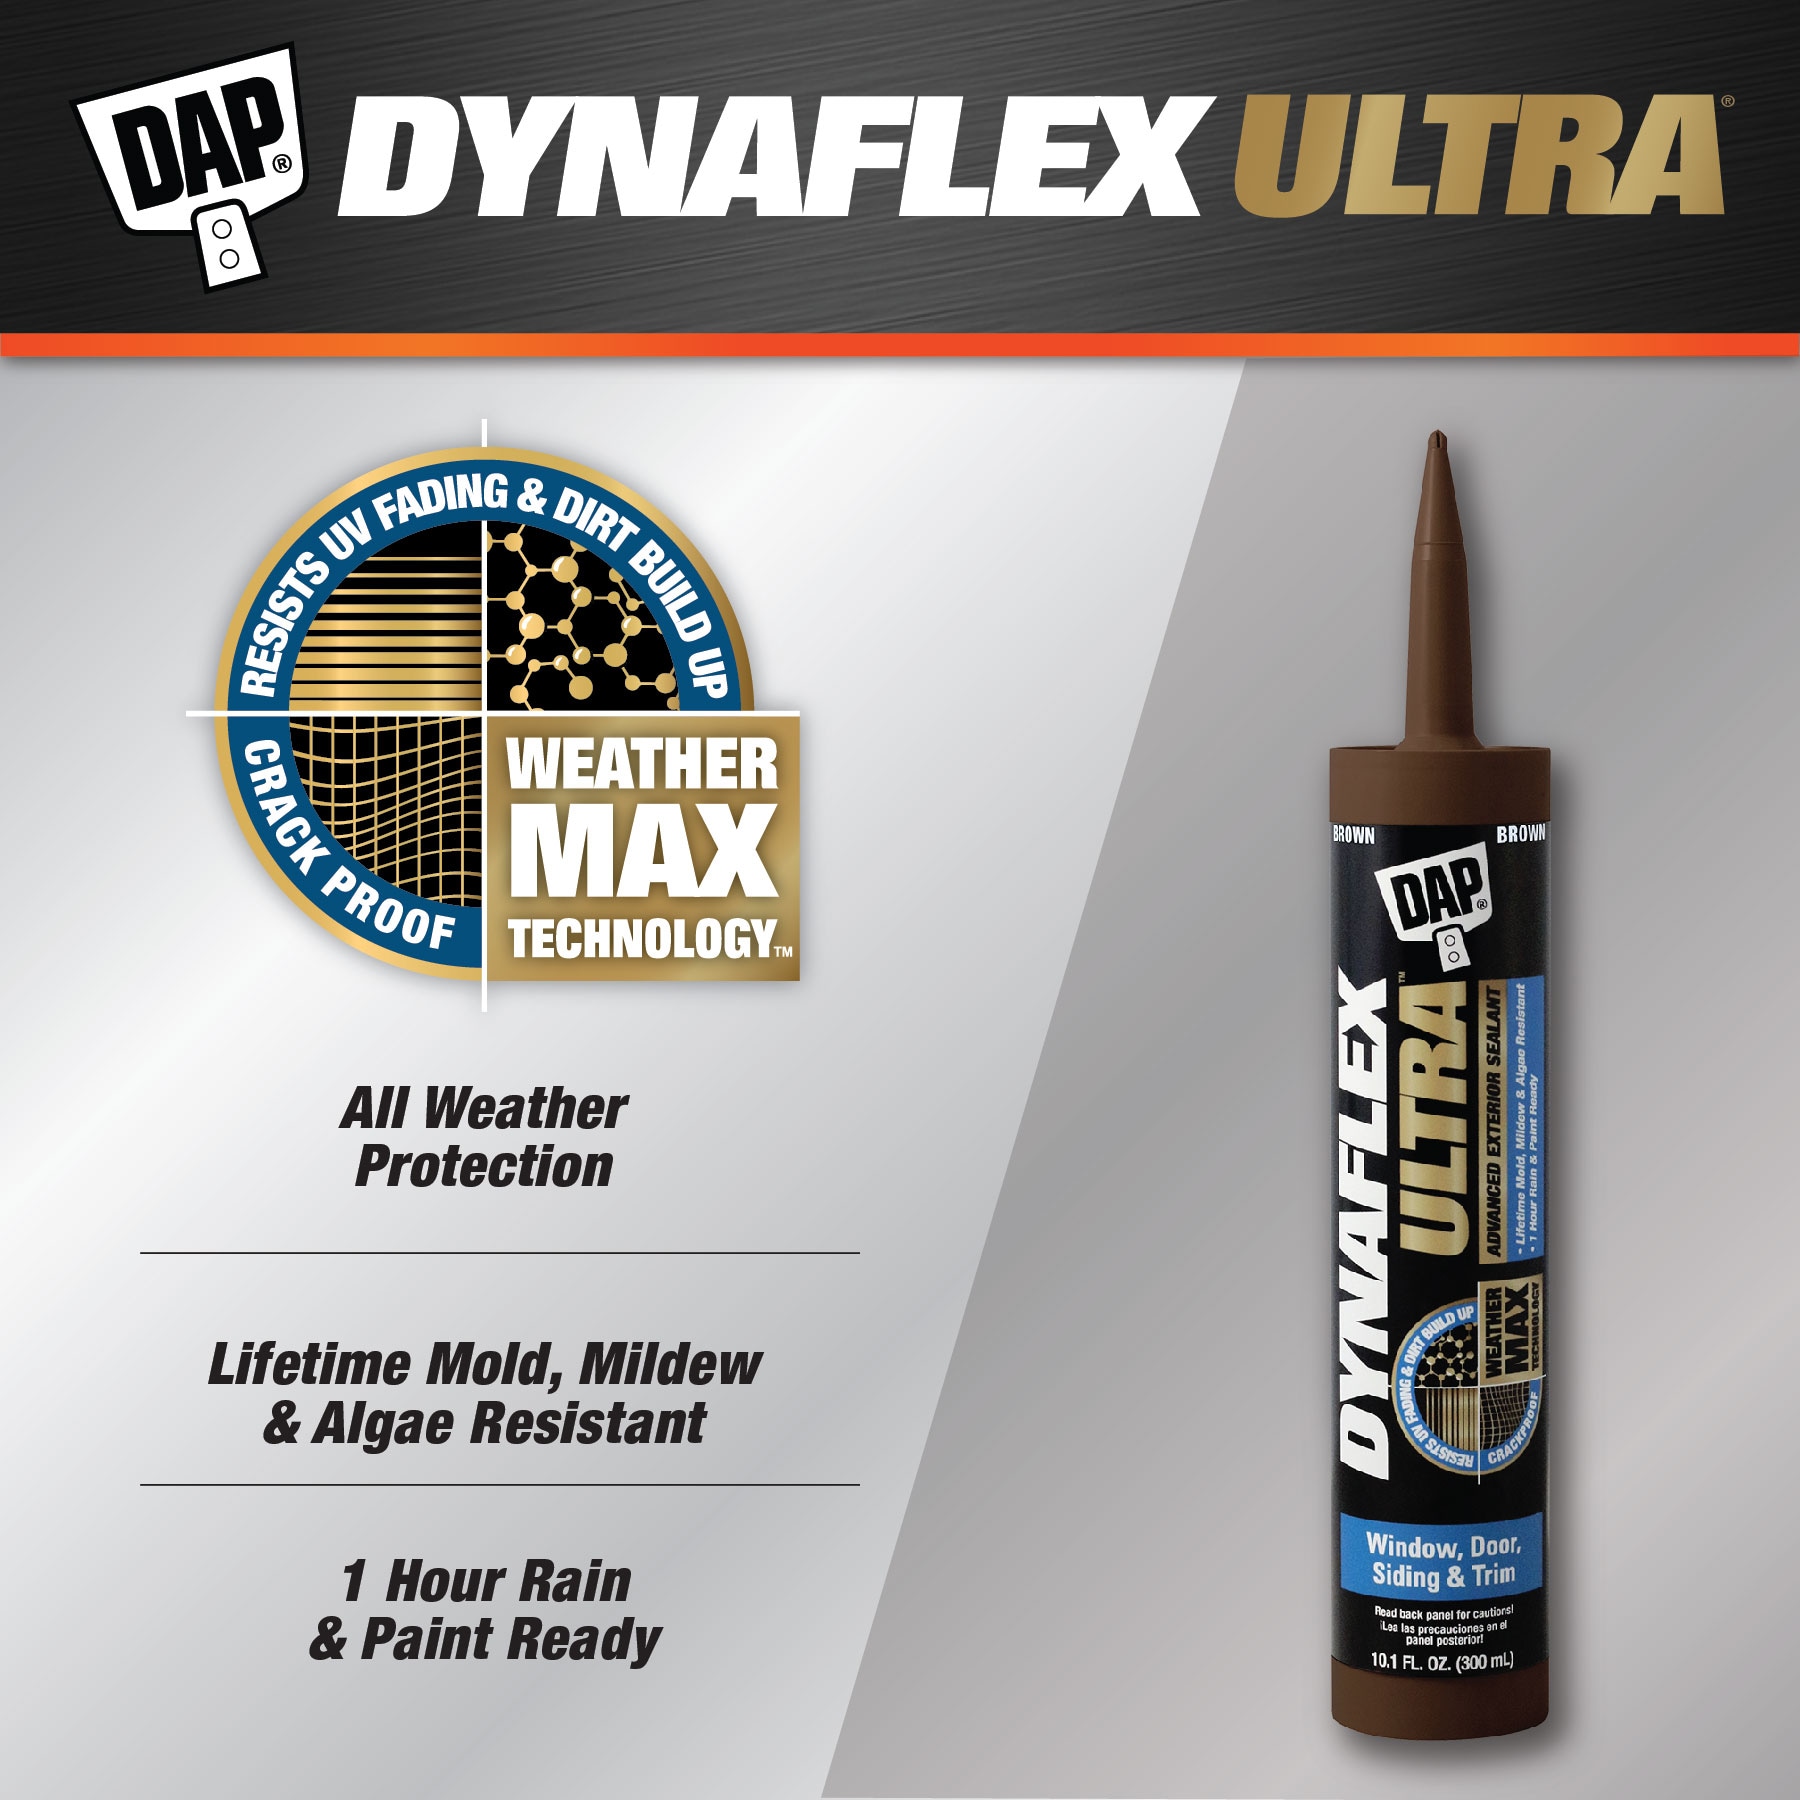 Ultra Dynaflex Caulk at Brown in 10.1-oz Caulk Latex department DAP Paintable the